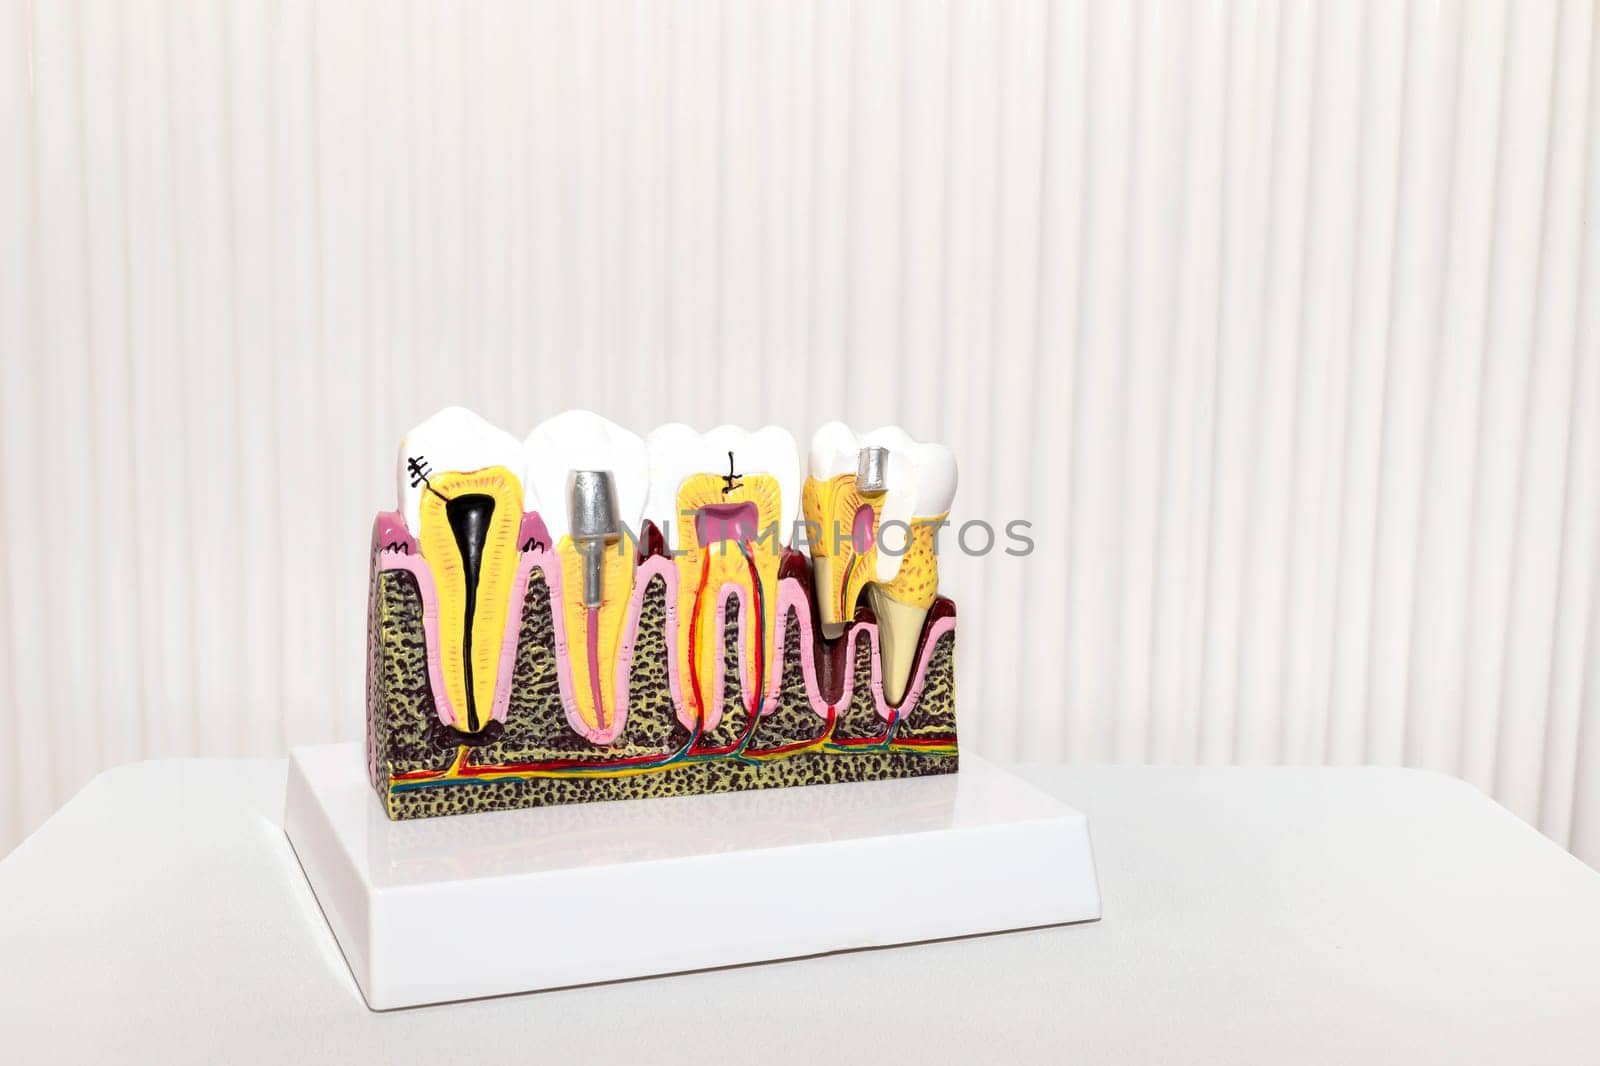 Dental Tooth Implant, Bridge Or Crown Model On White Background in Dental Office, Copy Space. Dummy Mockup Human Jaw Oral Dentures. Prosthesis On Metal Peg. Horizontal Plane. Dentistry, Education. by netatsi